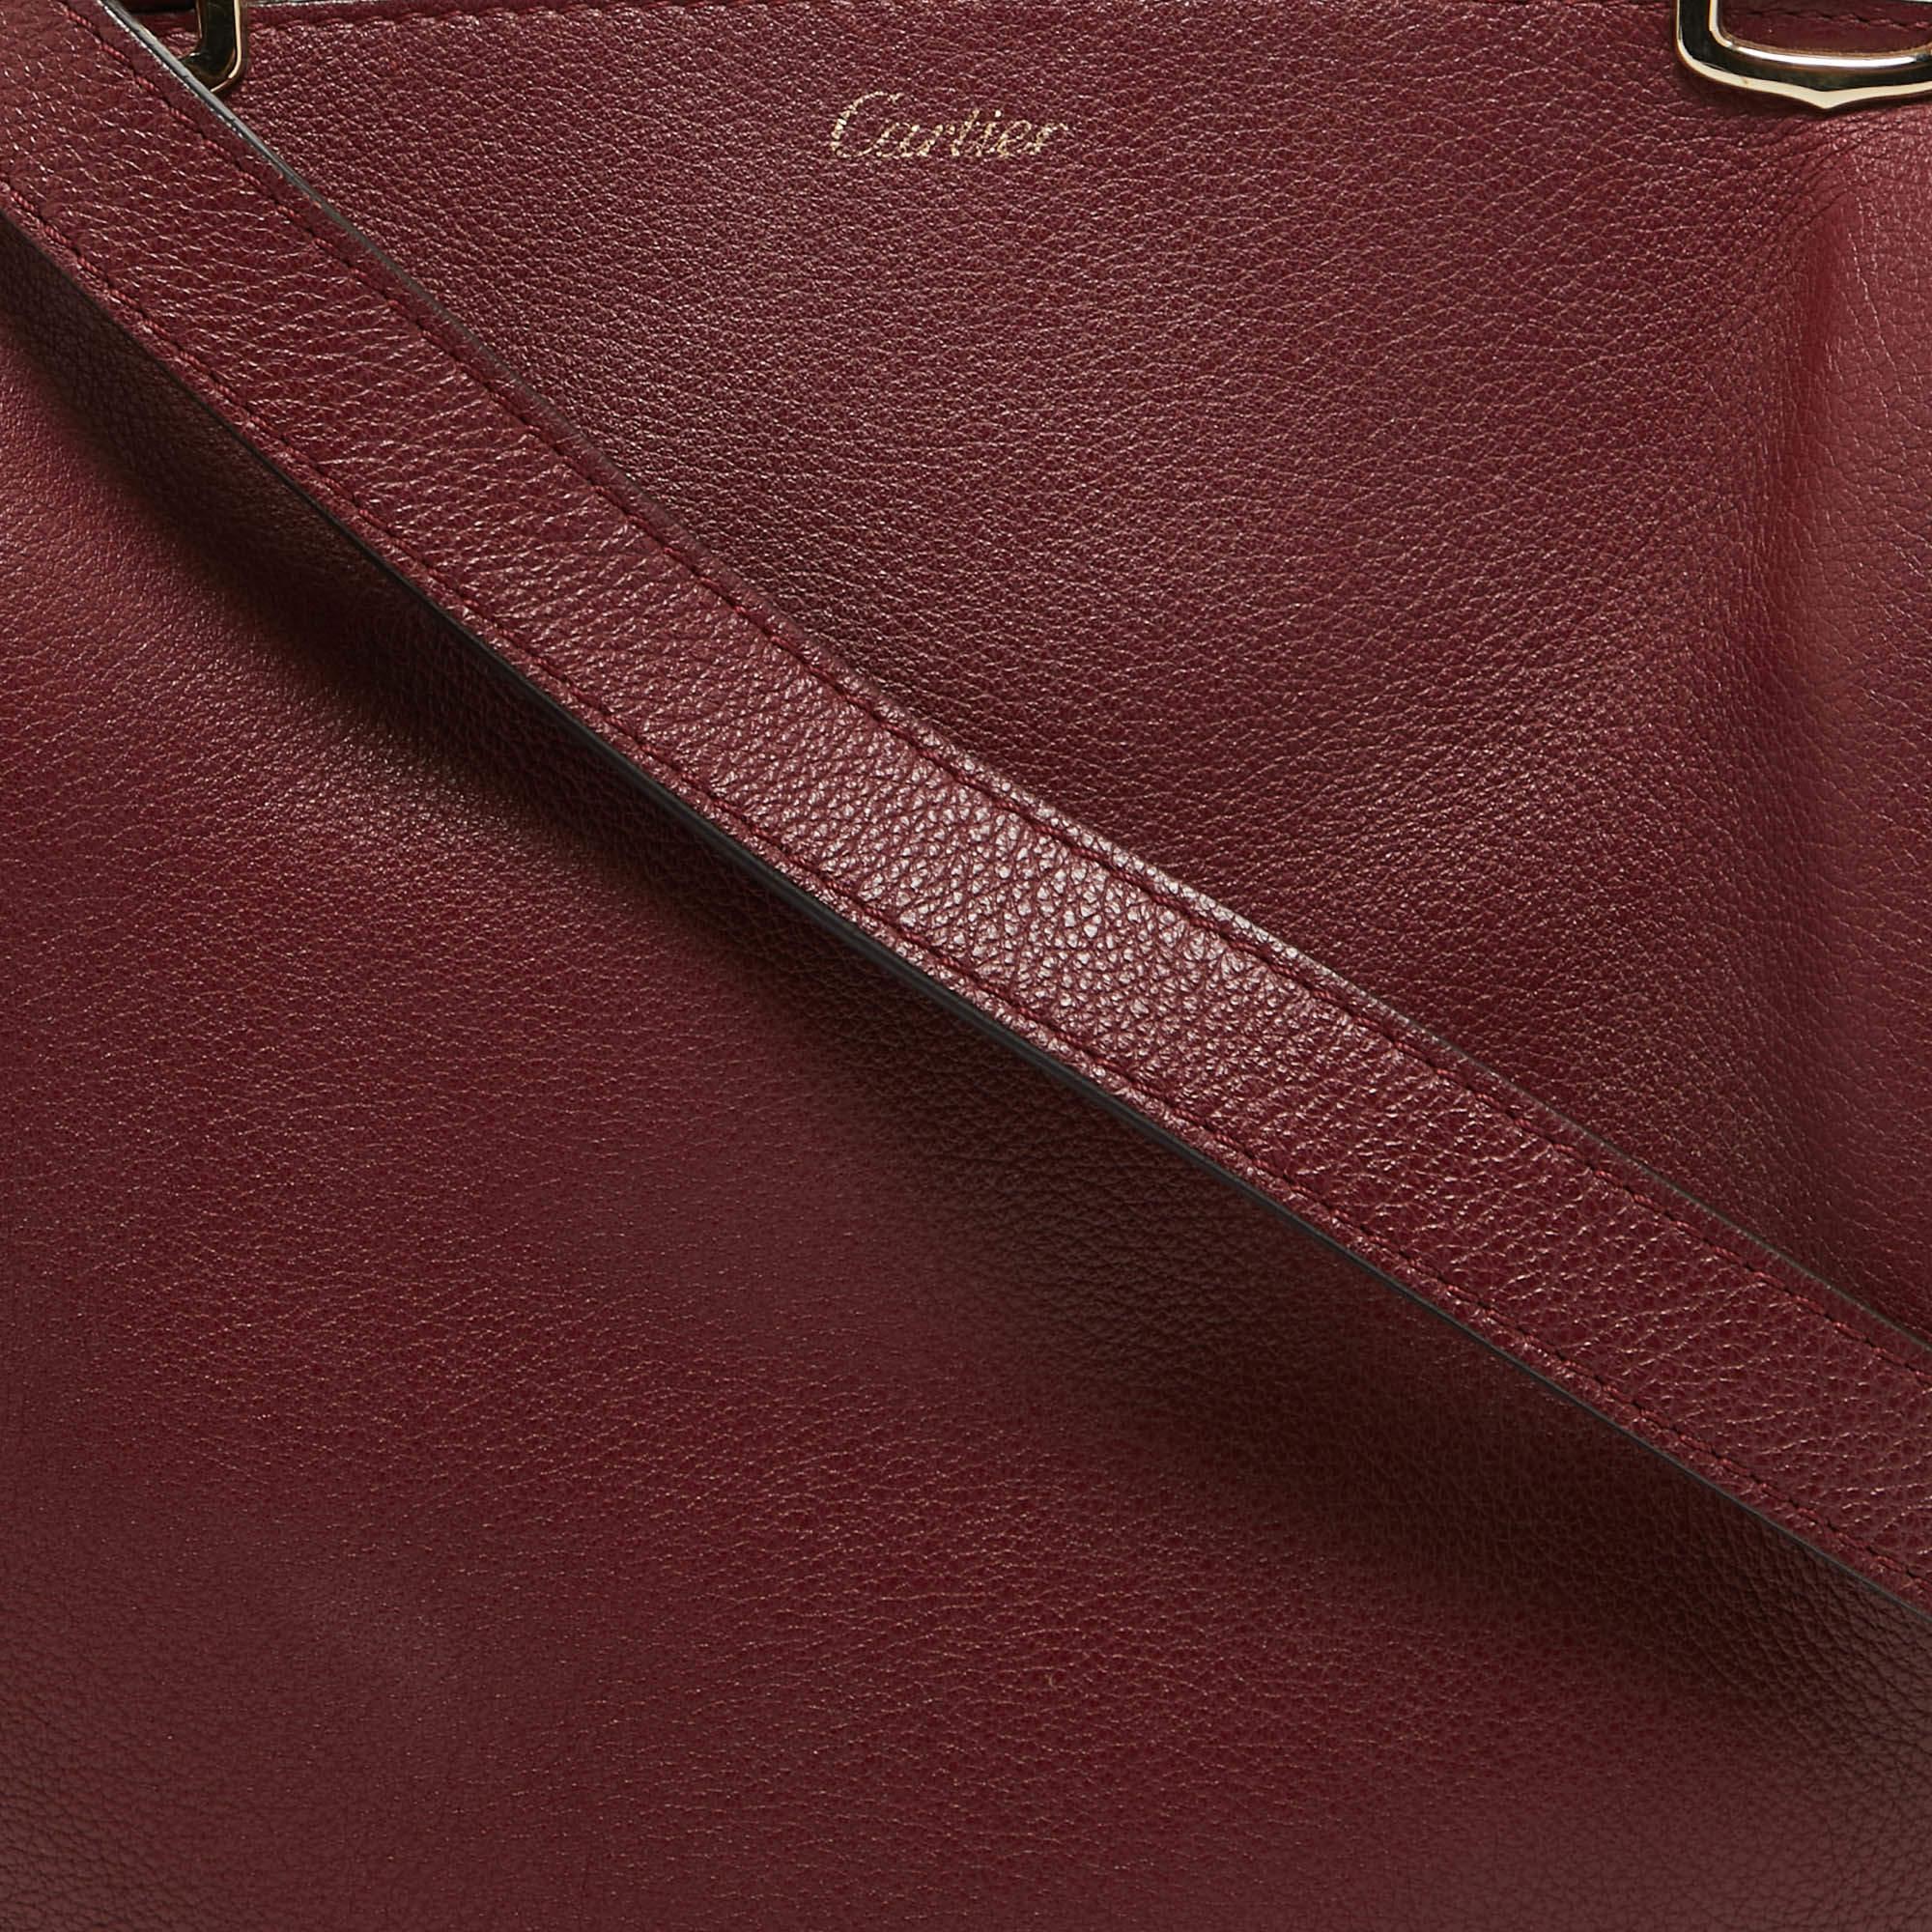 Cartier Dark Red Leather Small C de Cartier Satchel For Sale 2